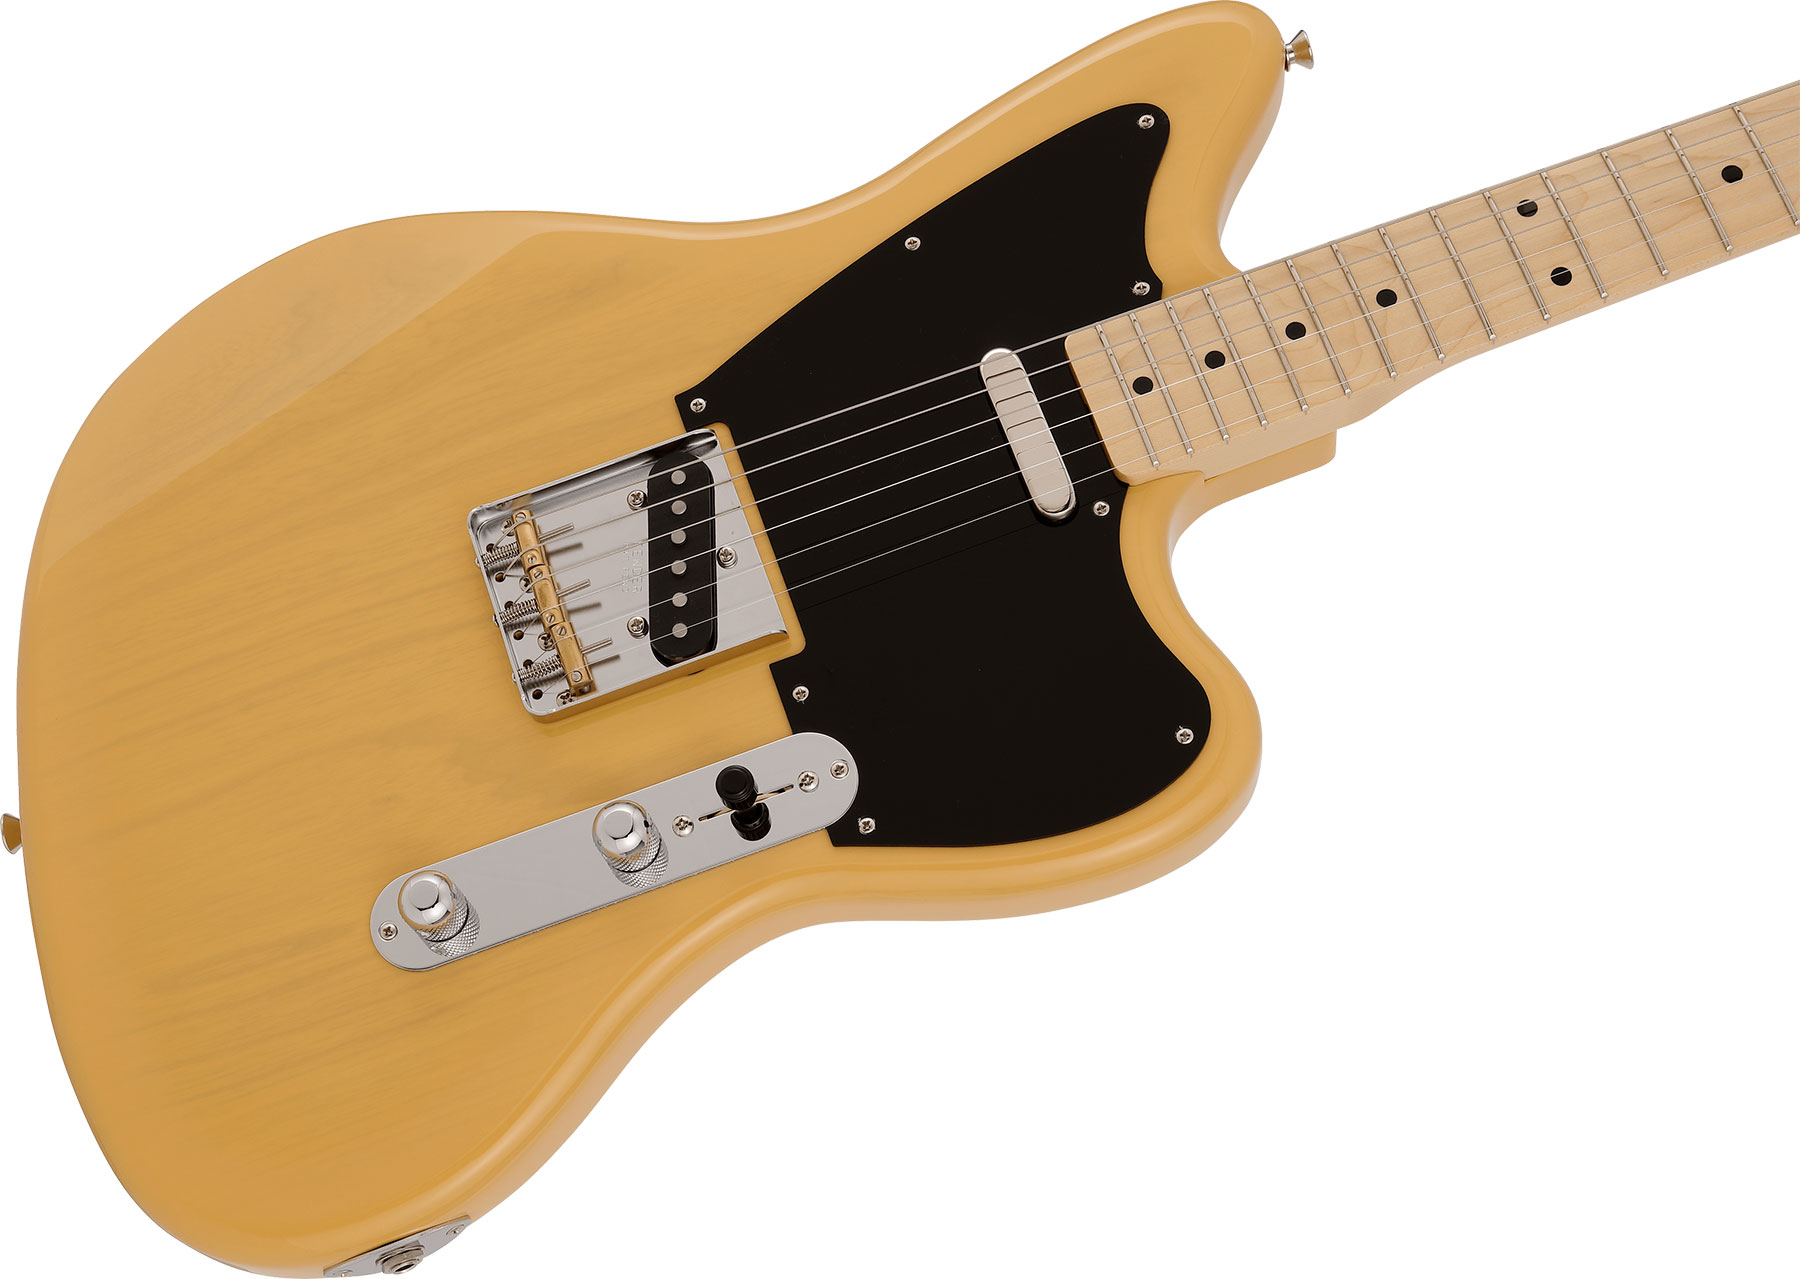 Fender Tele Offset Ltd Jap 2s Ht Mn - Butterscotch Blonde - Retro rock electric guitar - Variation 2